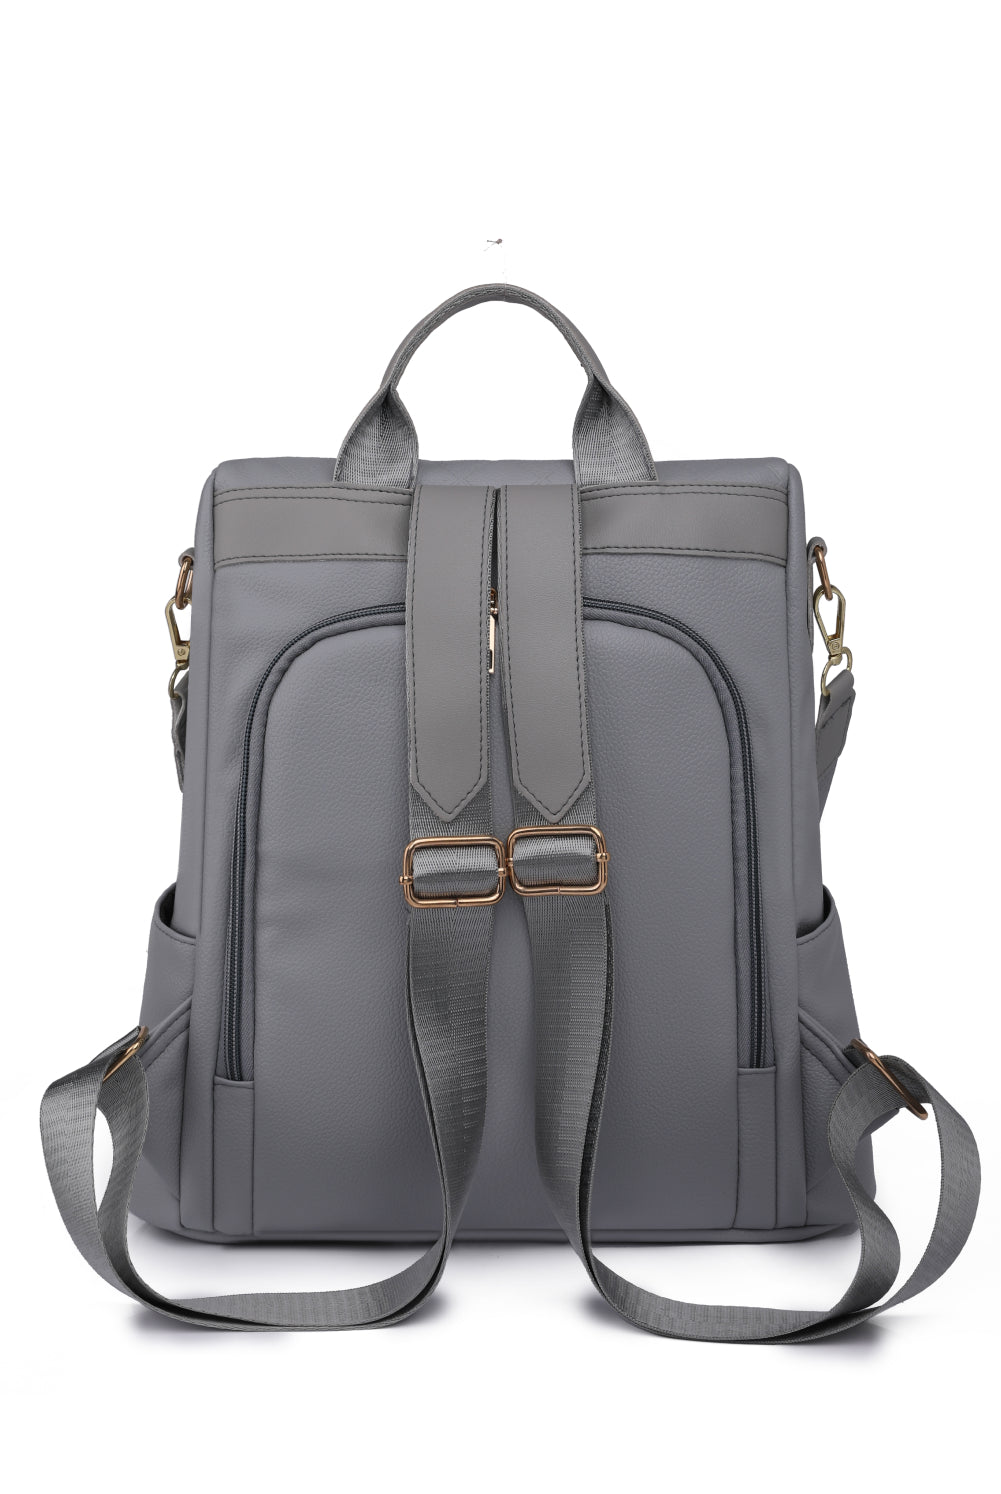 Dim Gray Pum-Pum Zipper Backpack Clothing